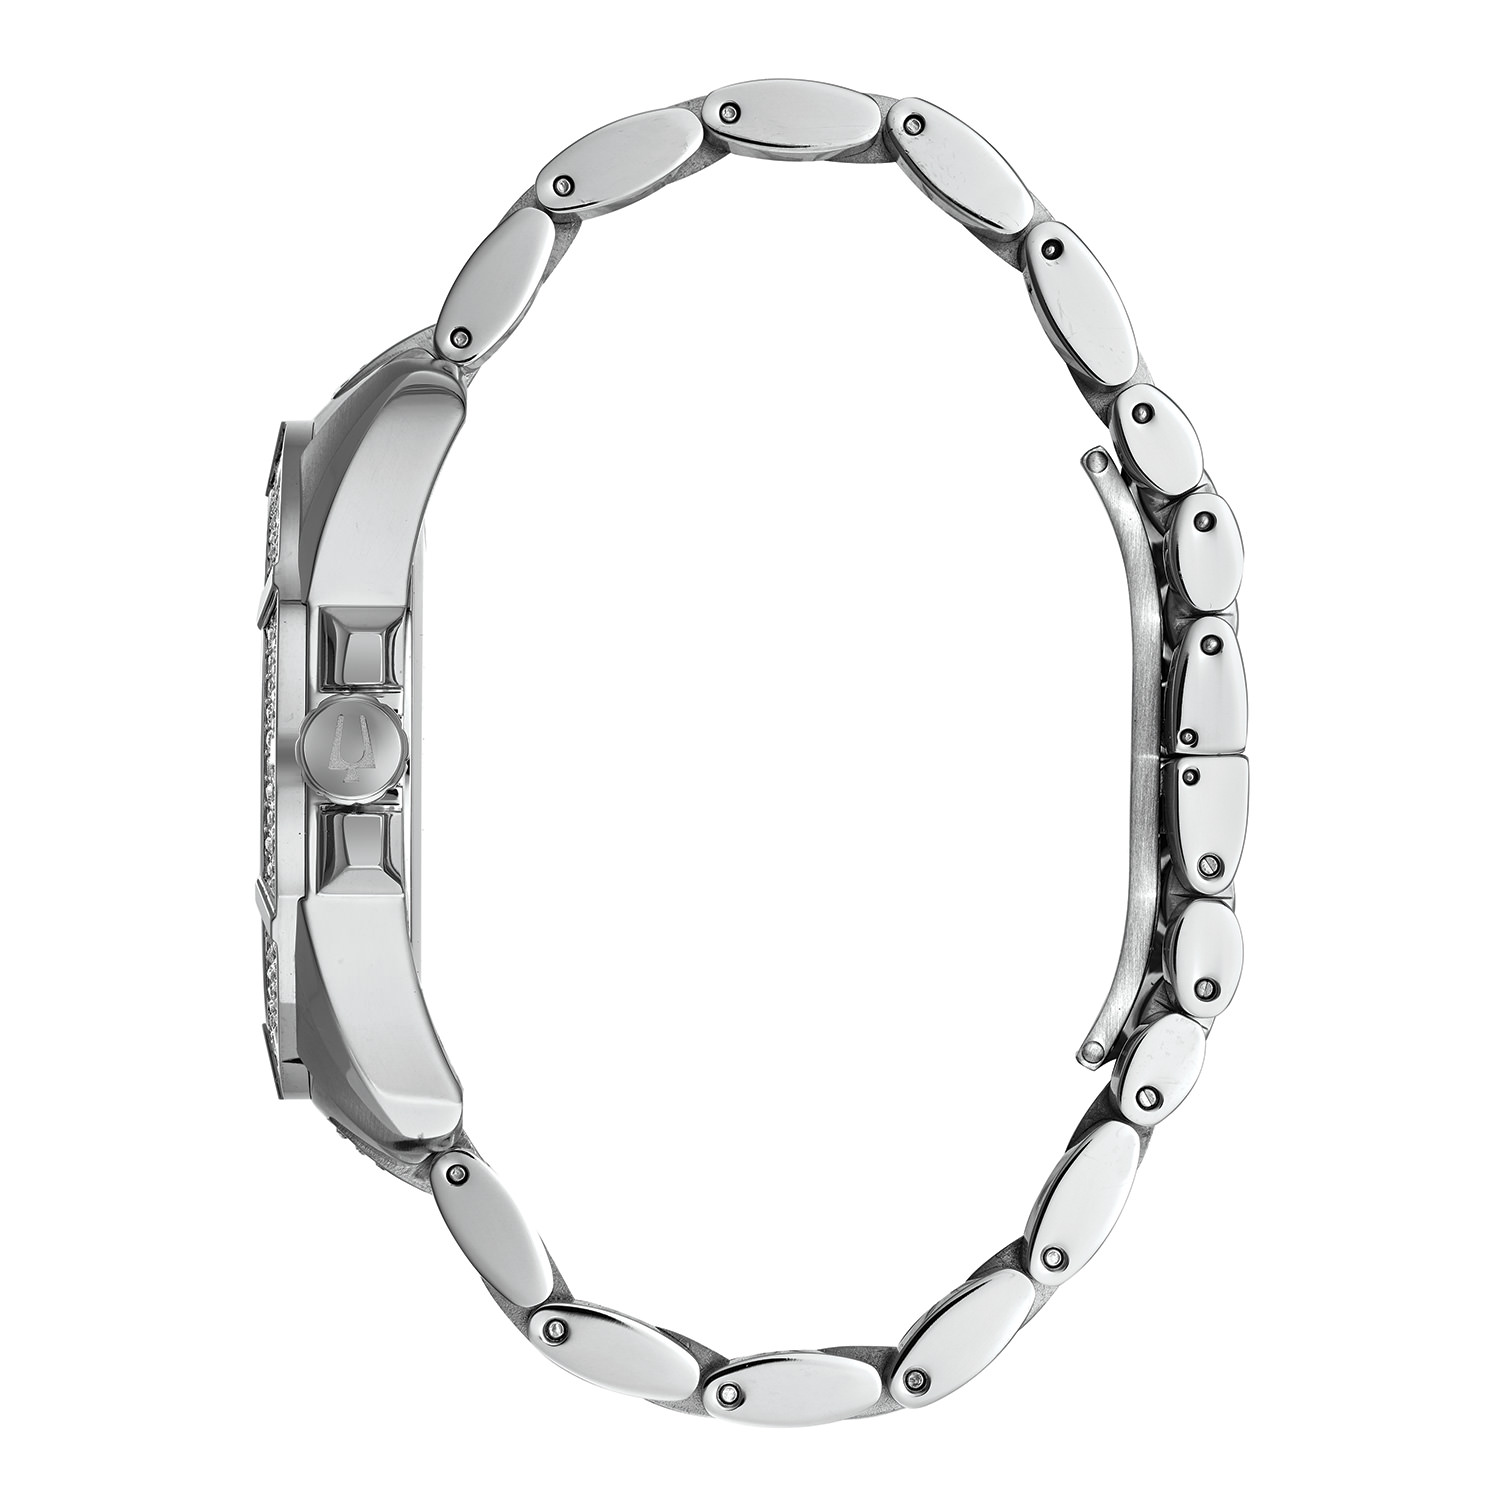 Bulova Men's Stainless Steel Crystal Watch 96C126 - image 3 of 3